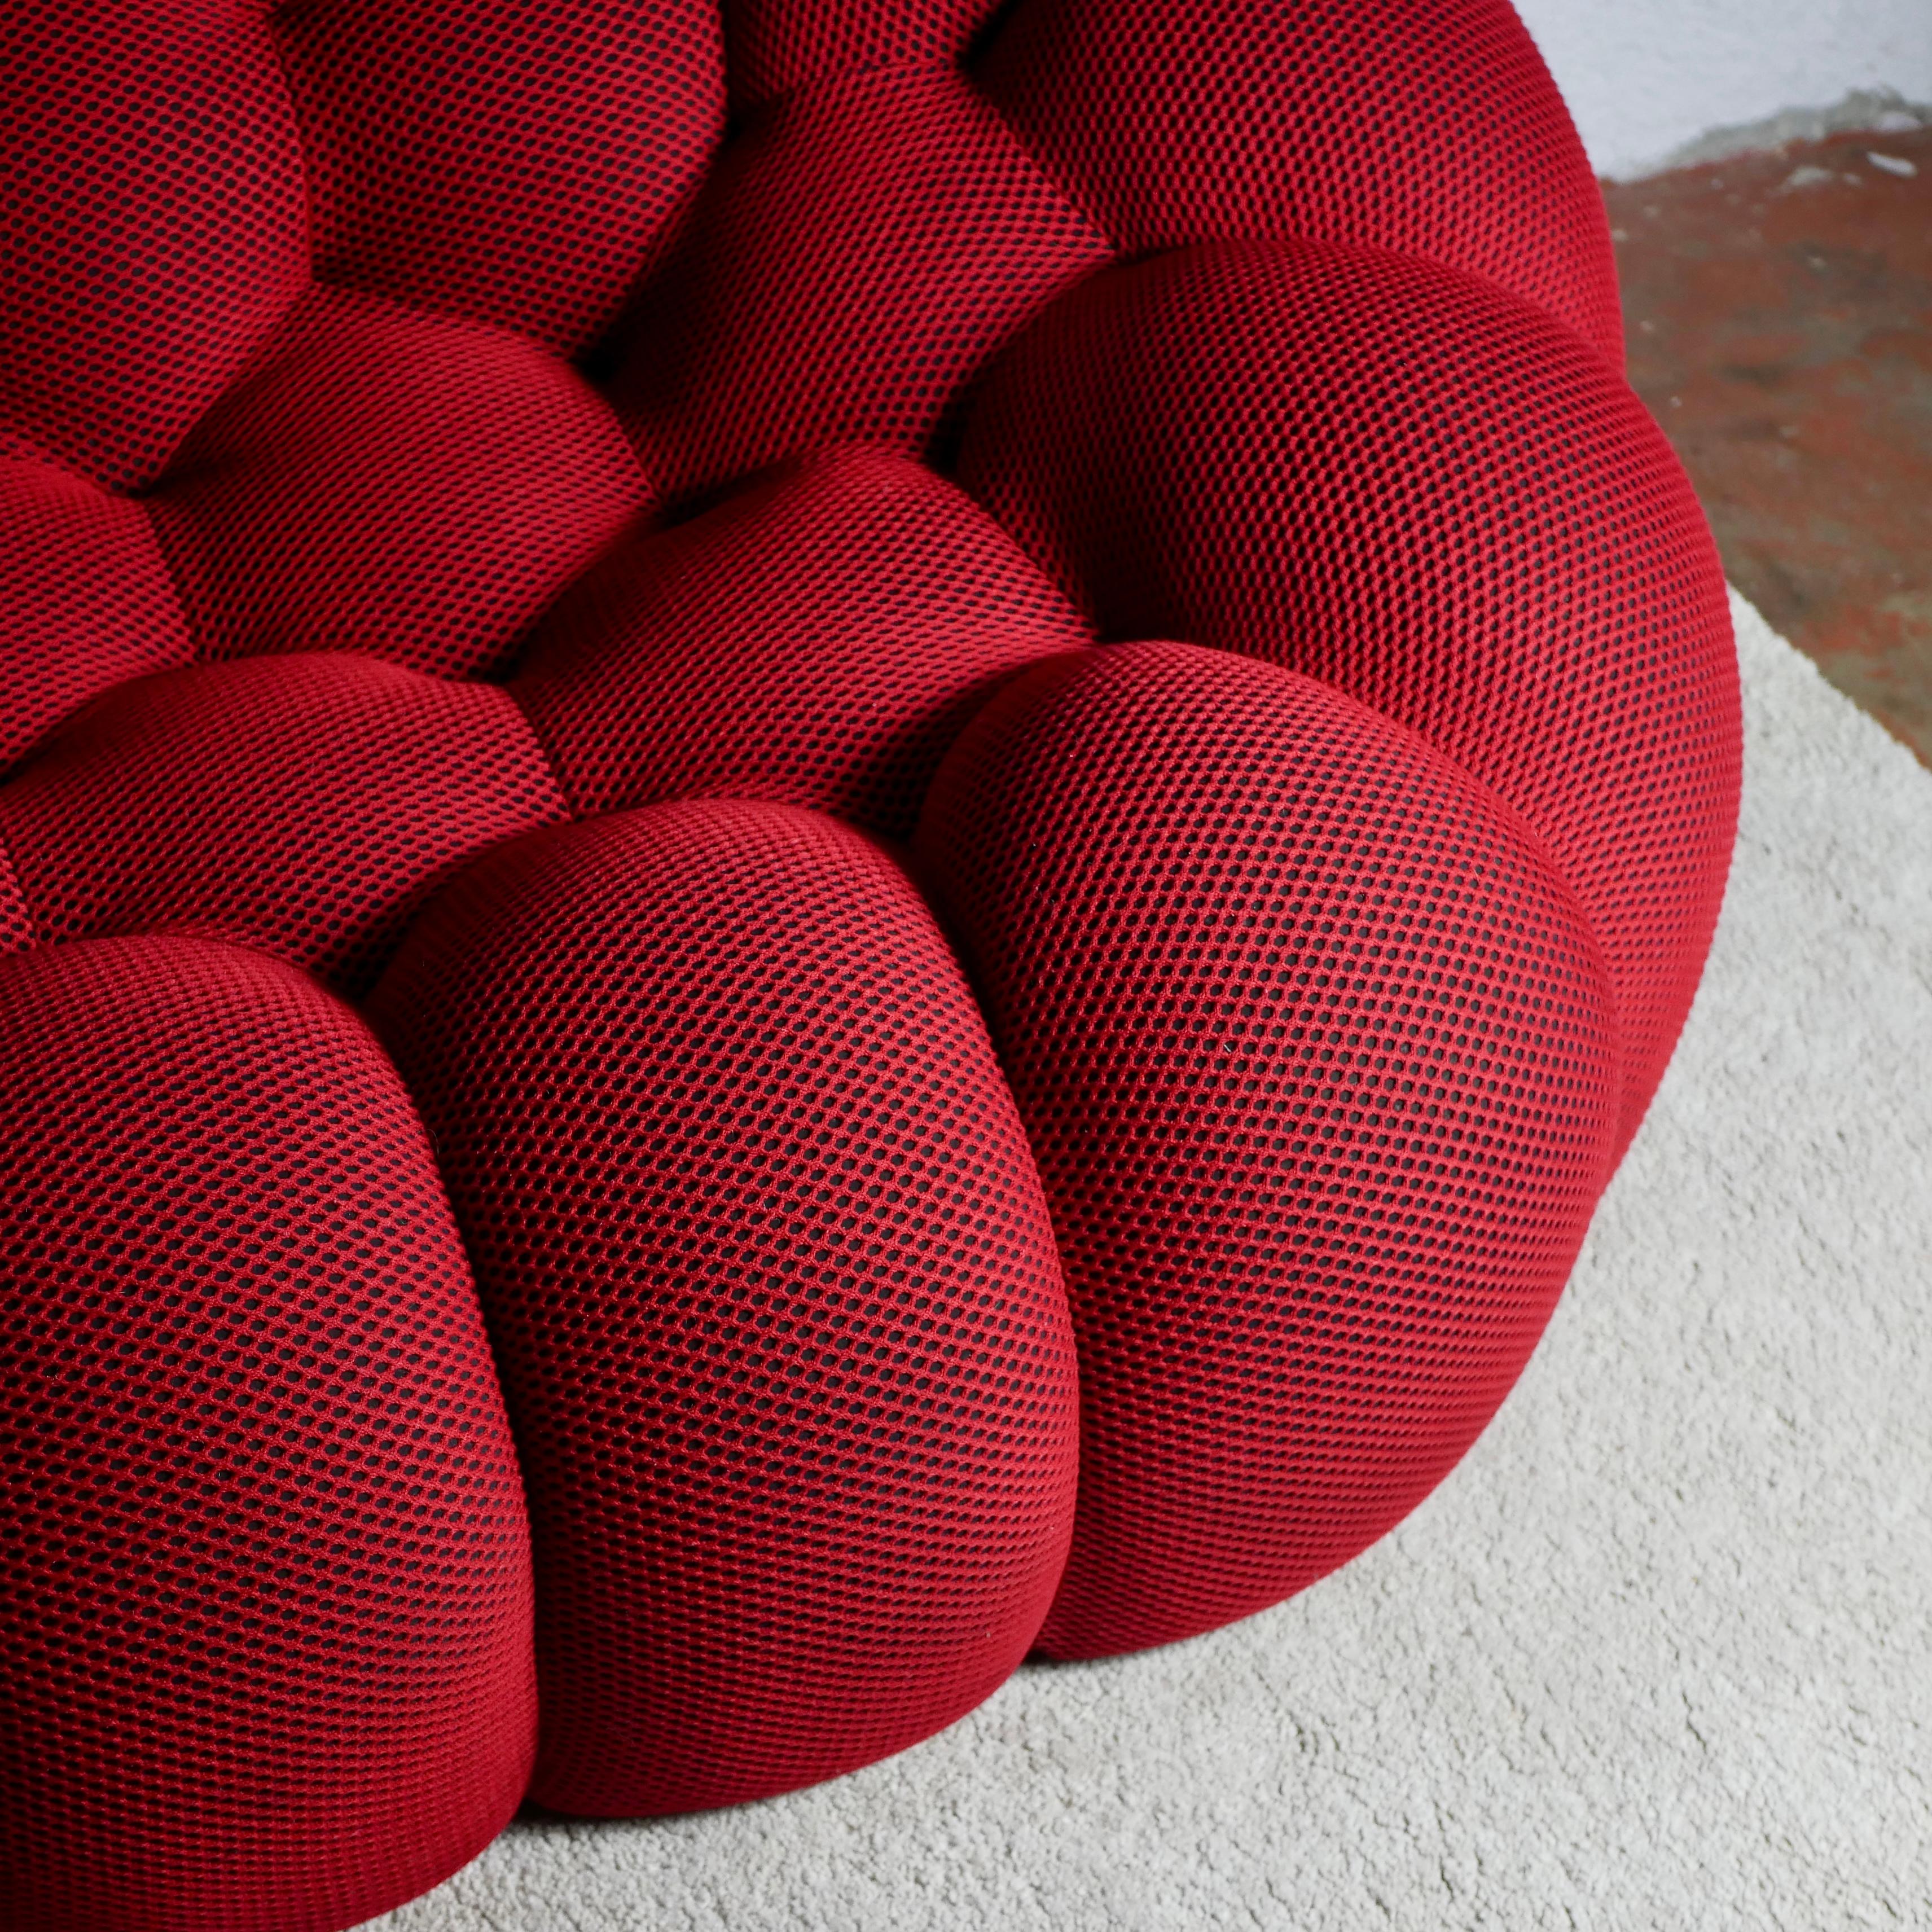 French Bubble sofa Techno 3D fabric by Sacha Lakic for Roche Bobois, 2014